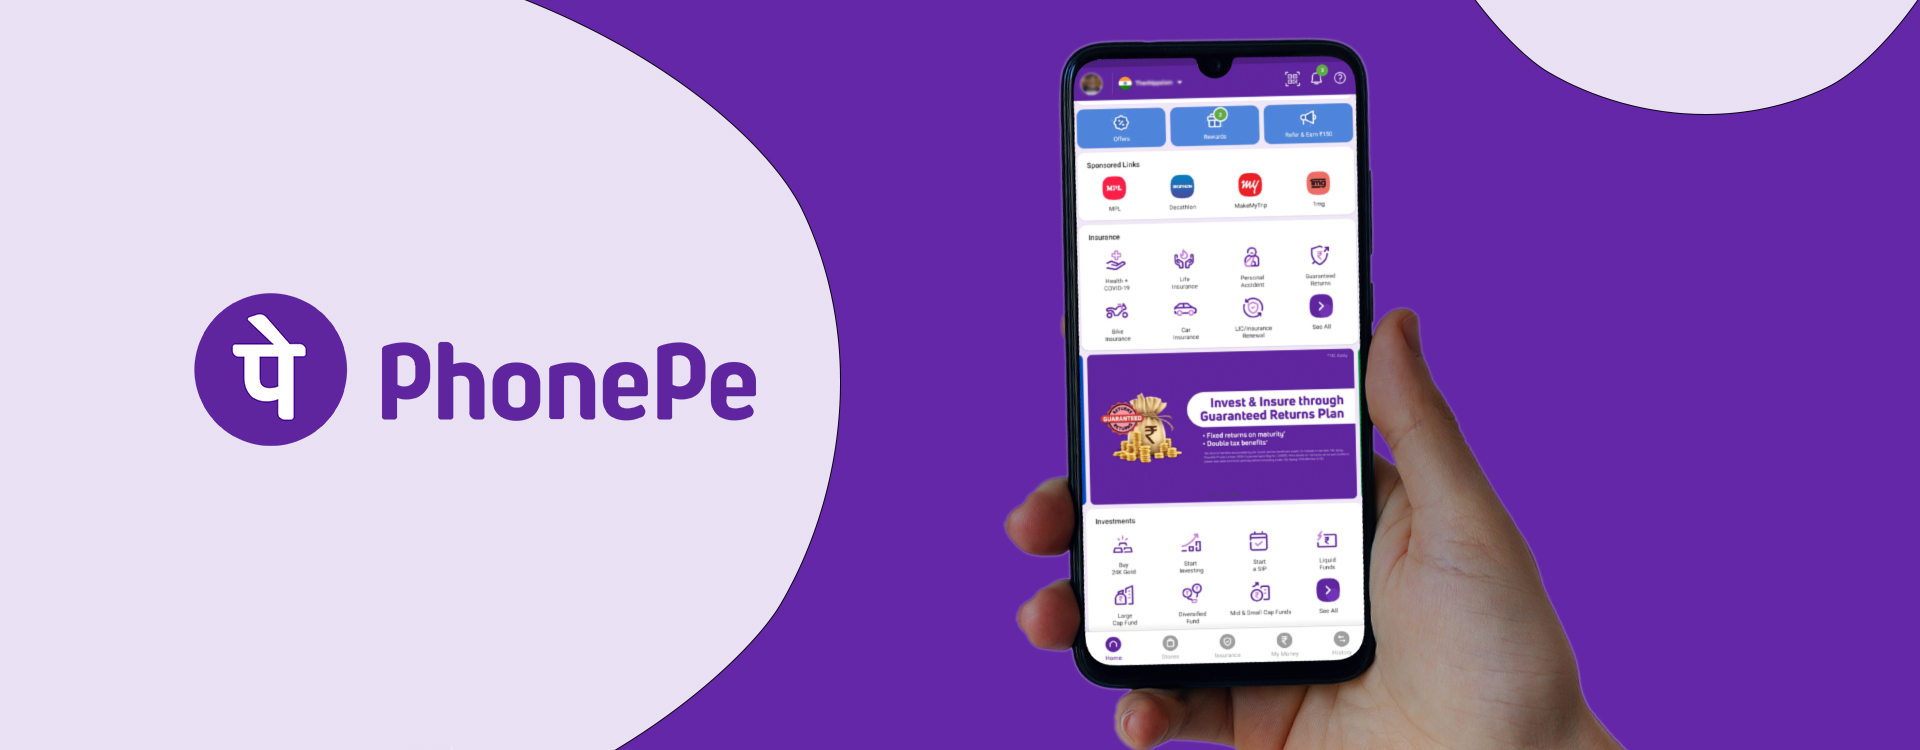 Phonepe UPI App